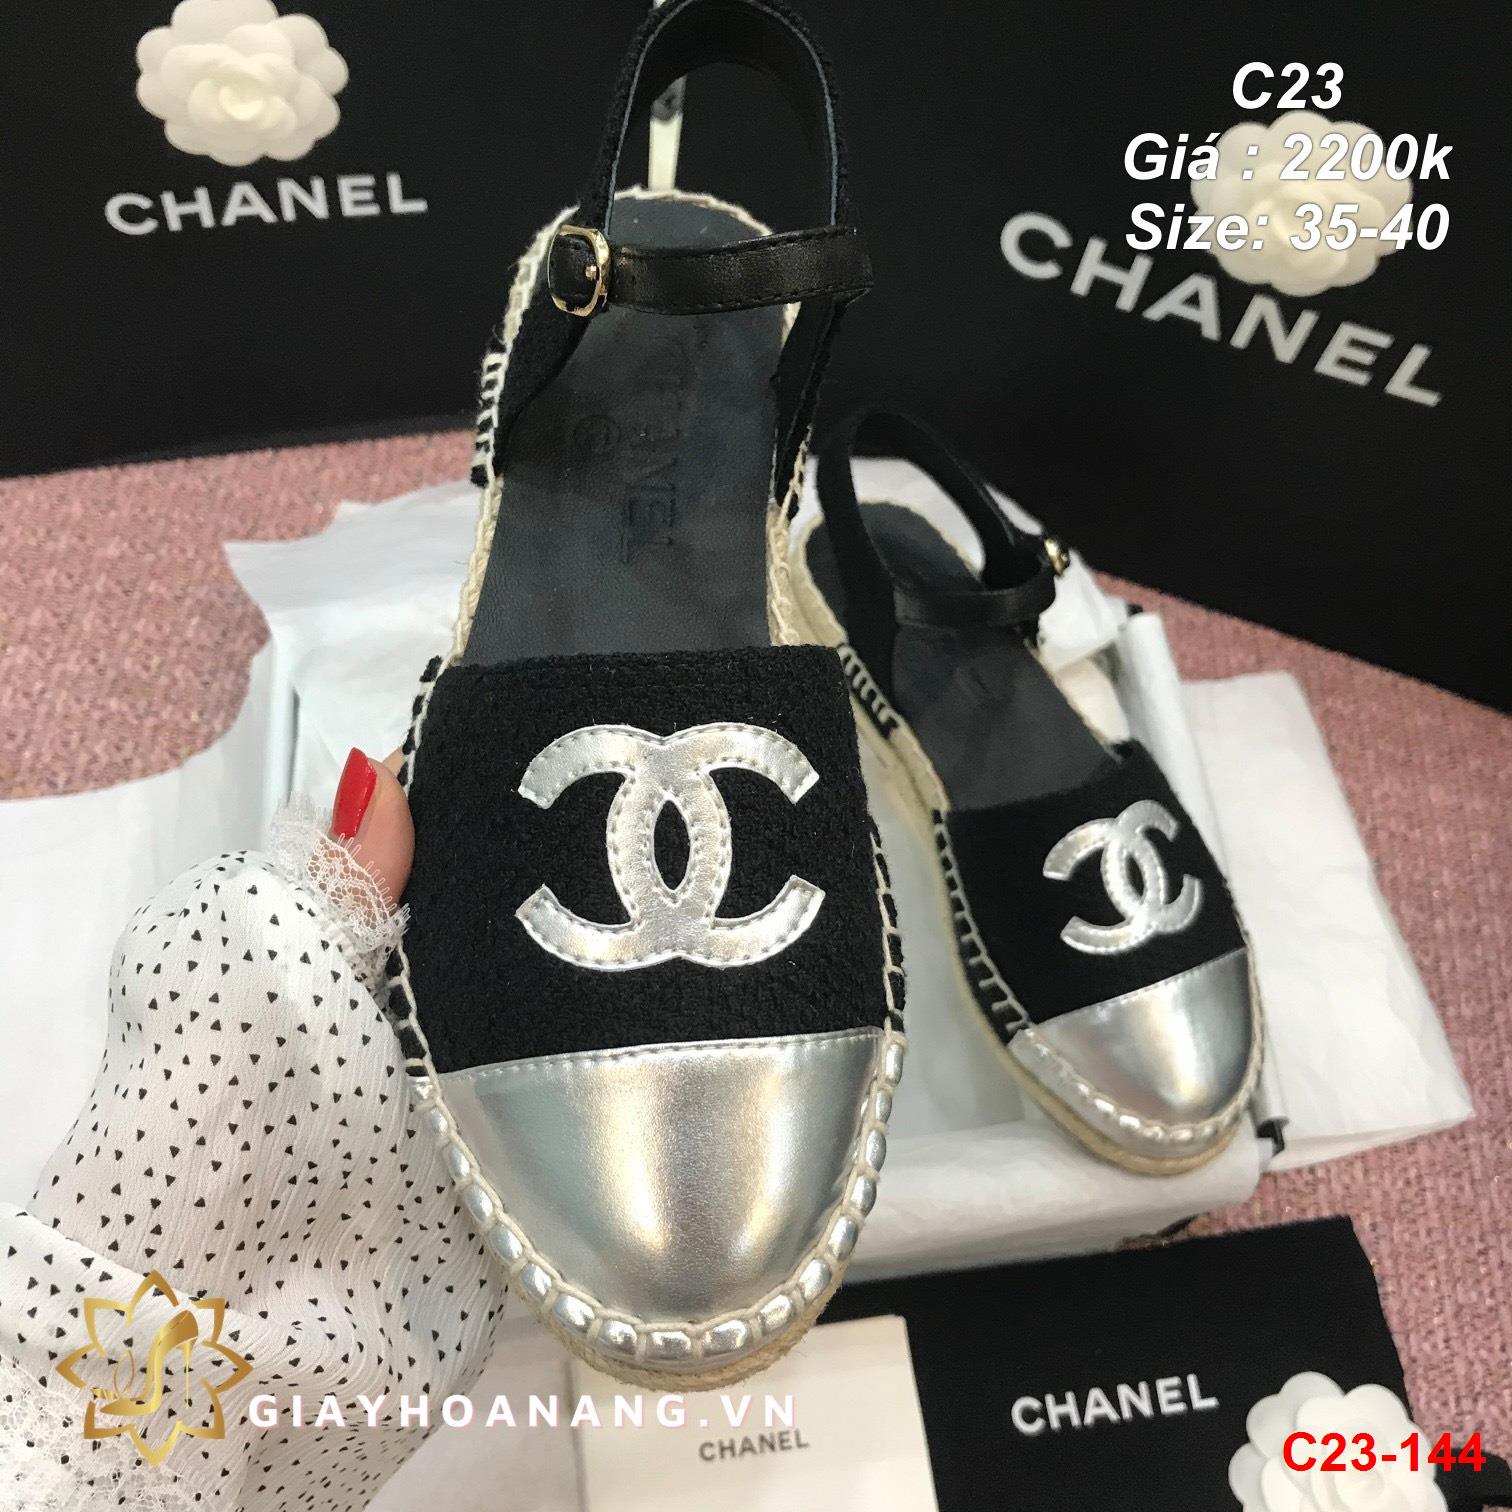 C23-144 Chanel sandal siêu cấp